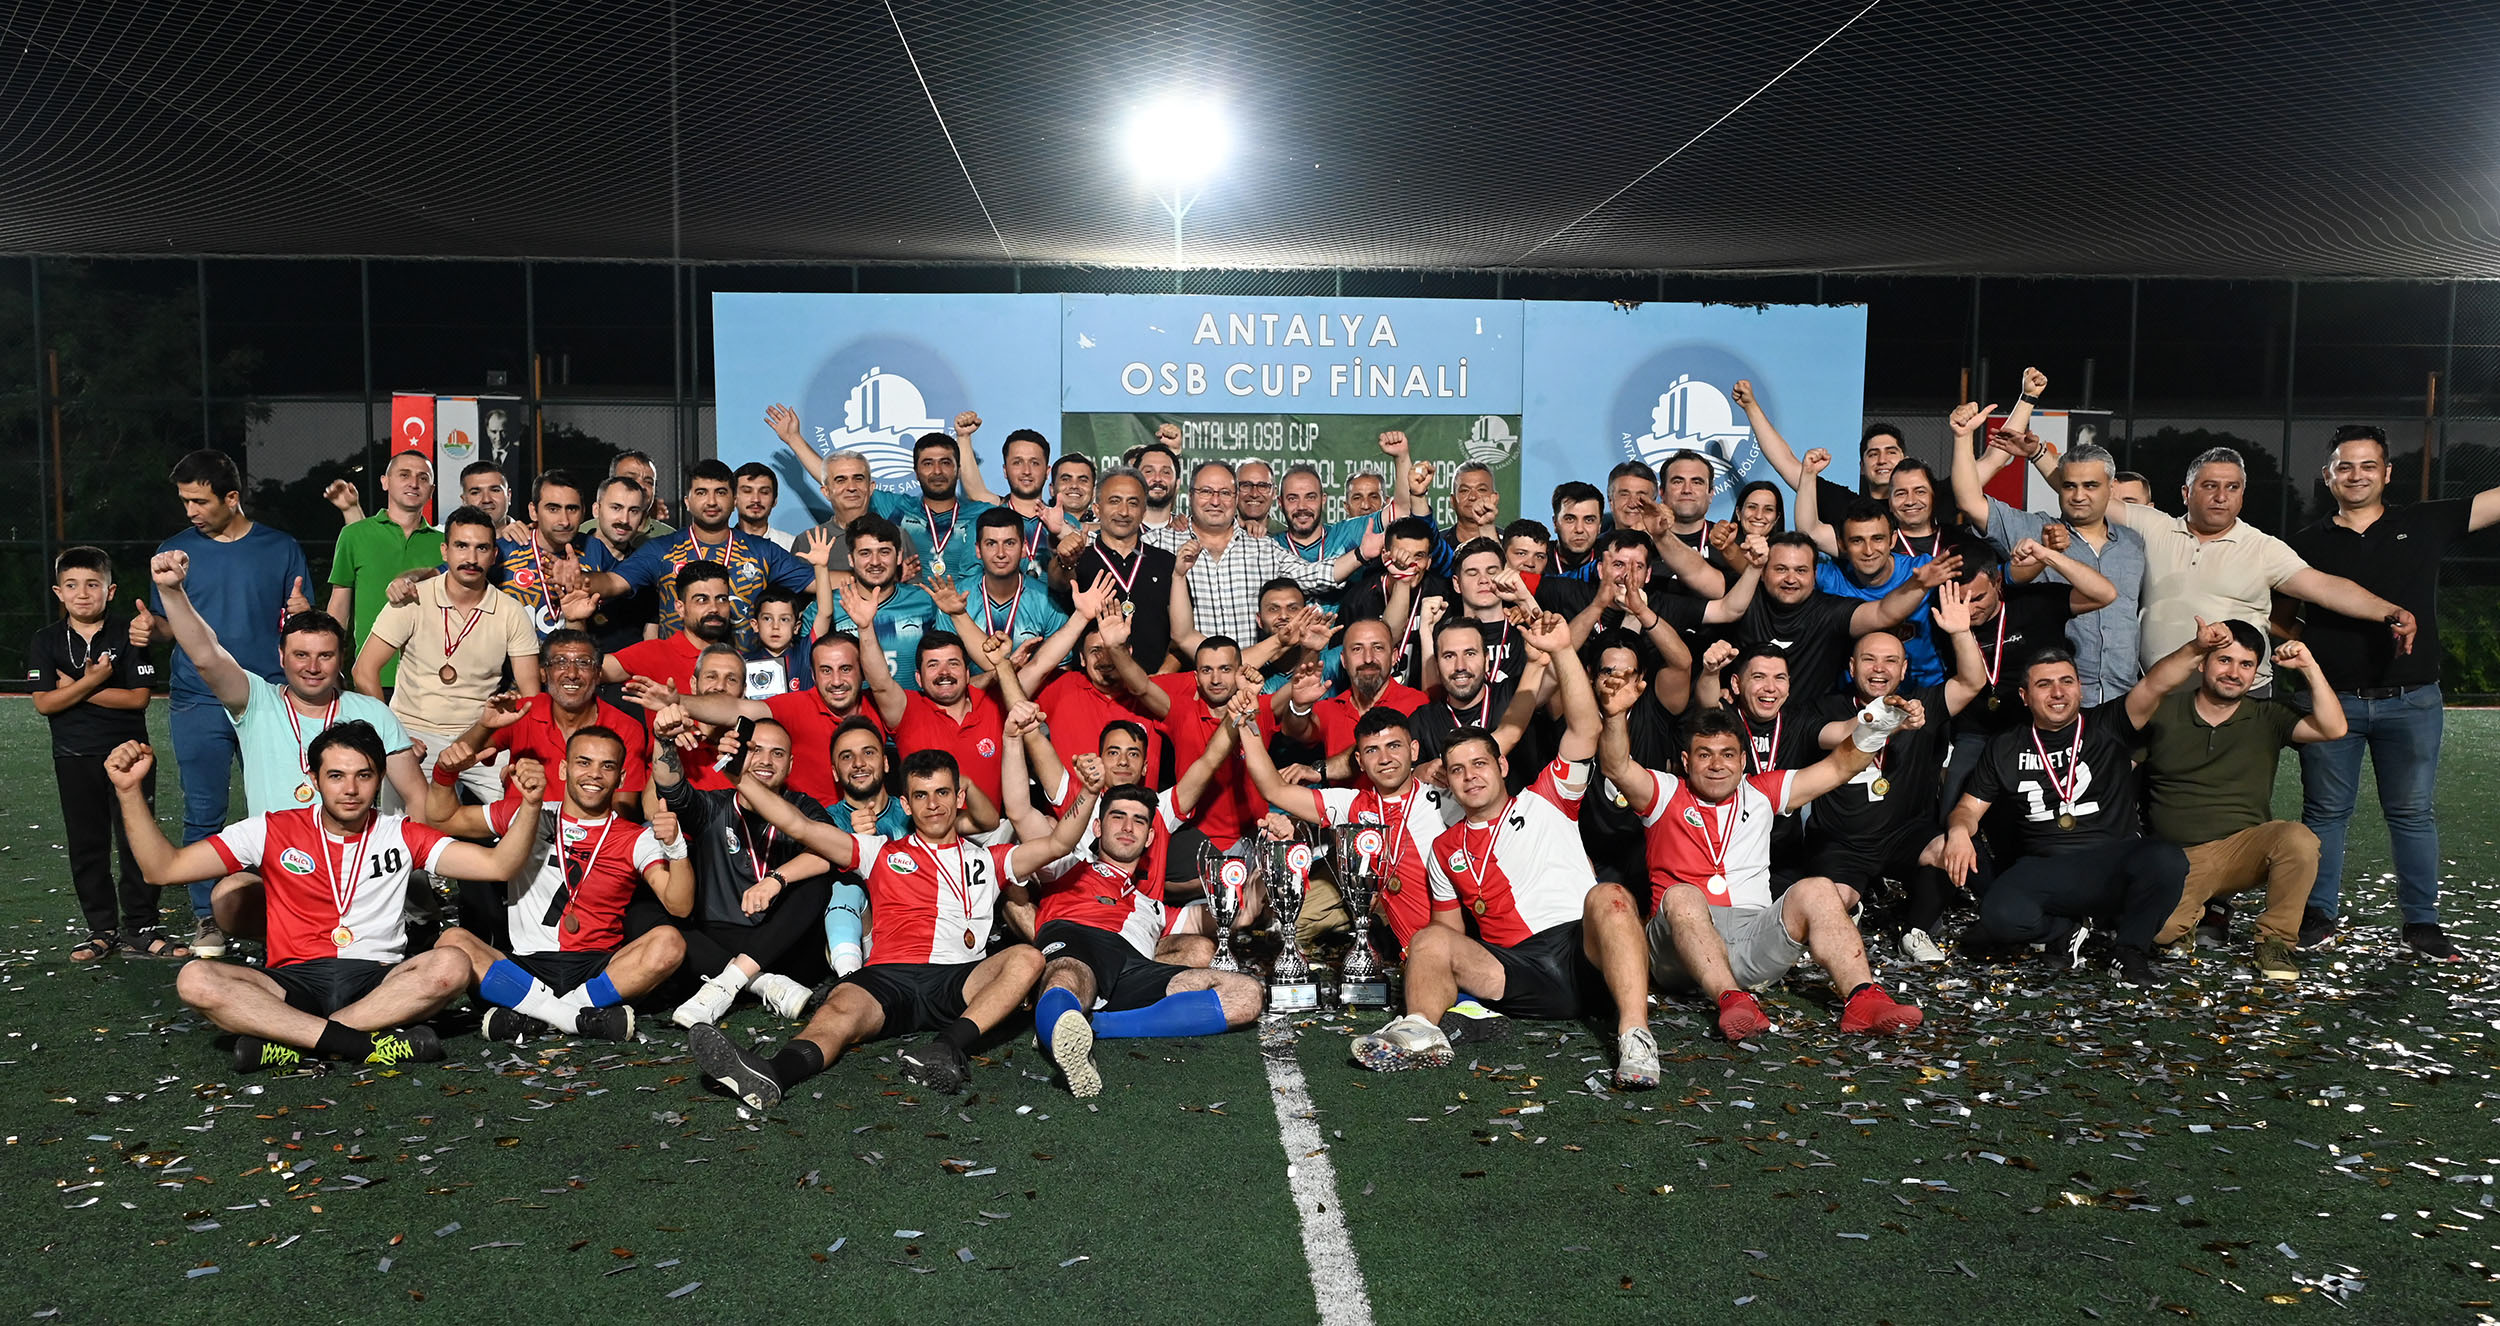 Antalya Osb Cup Final